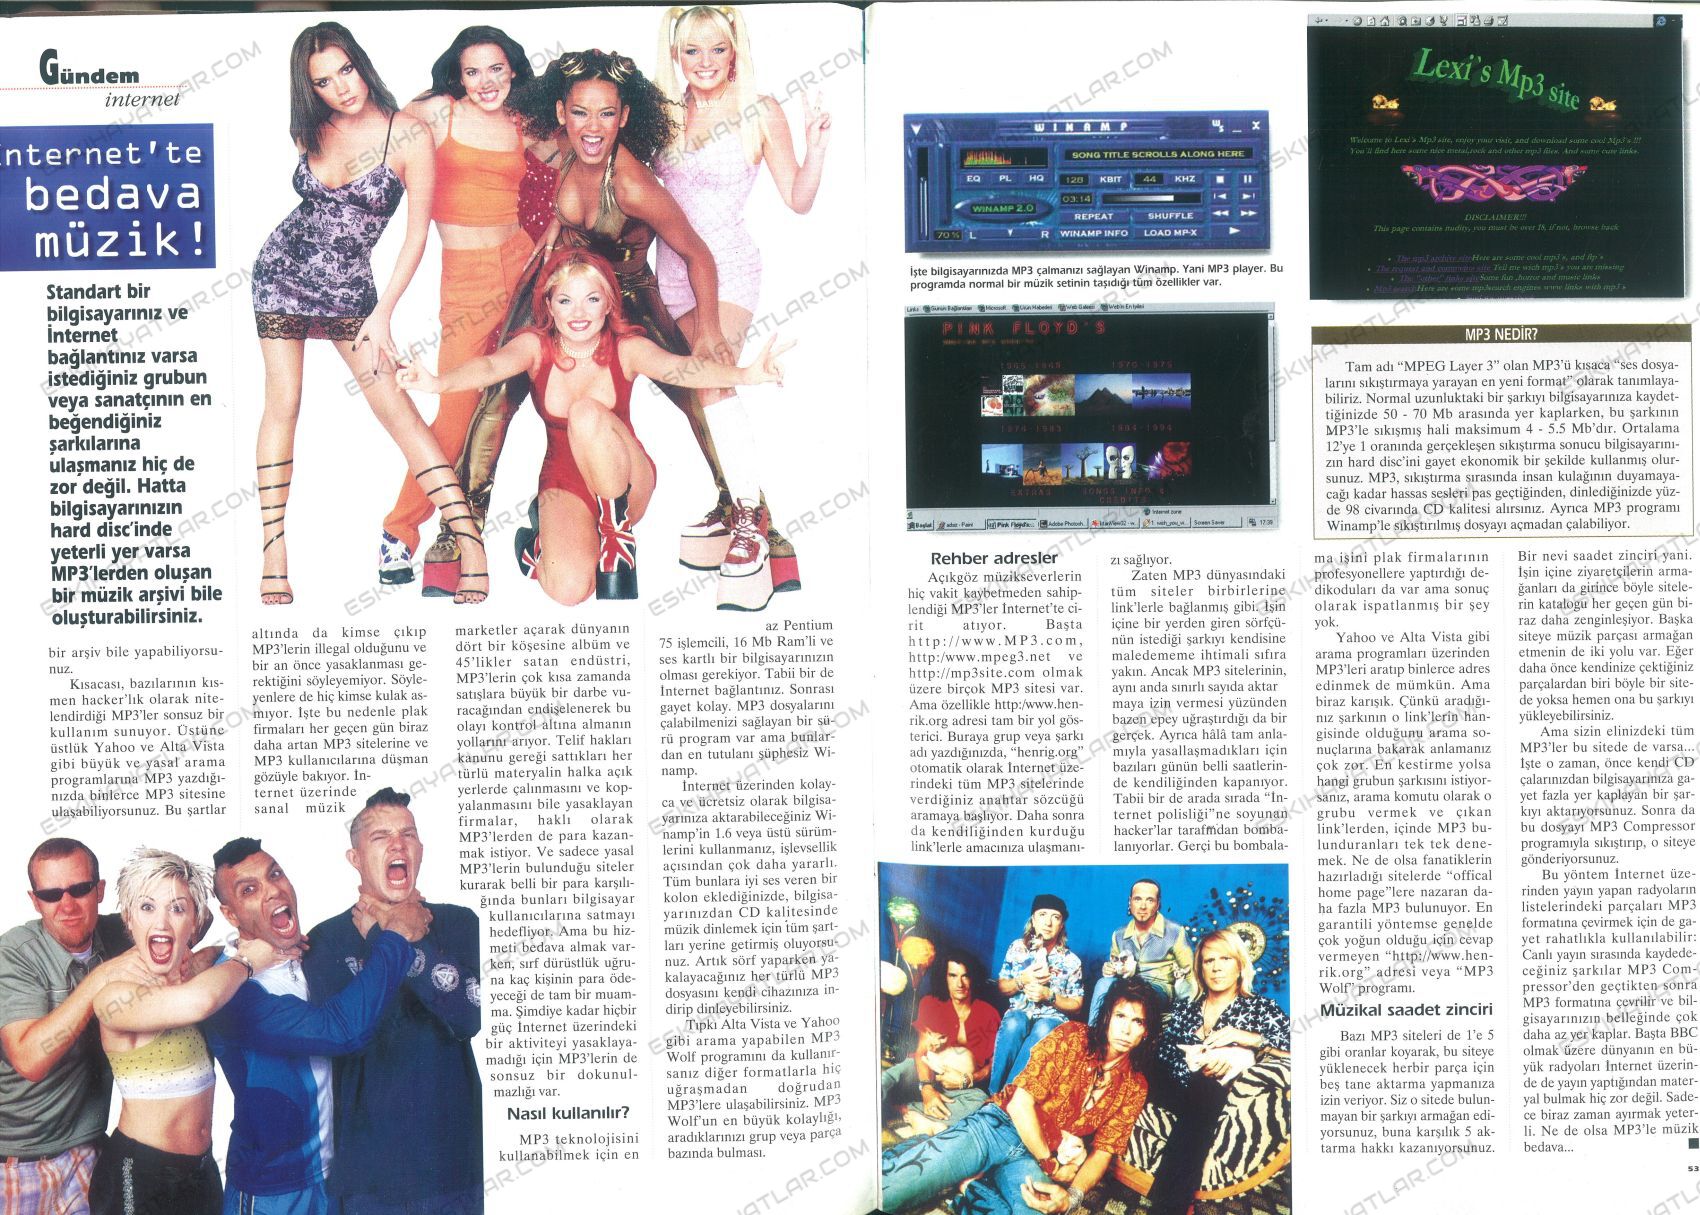 0416-internette-bedava-muzik-1998-yilinda-internet-aktuel-dergisi-napster-programi (2)